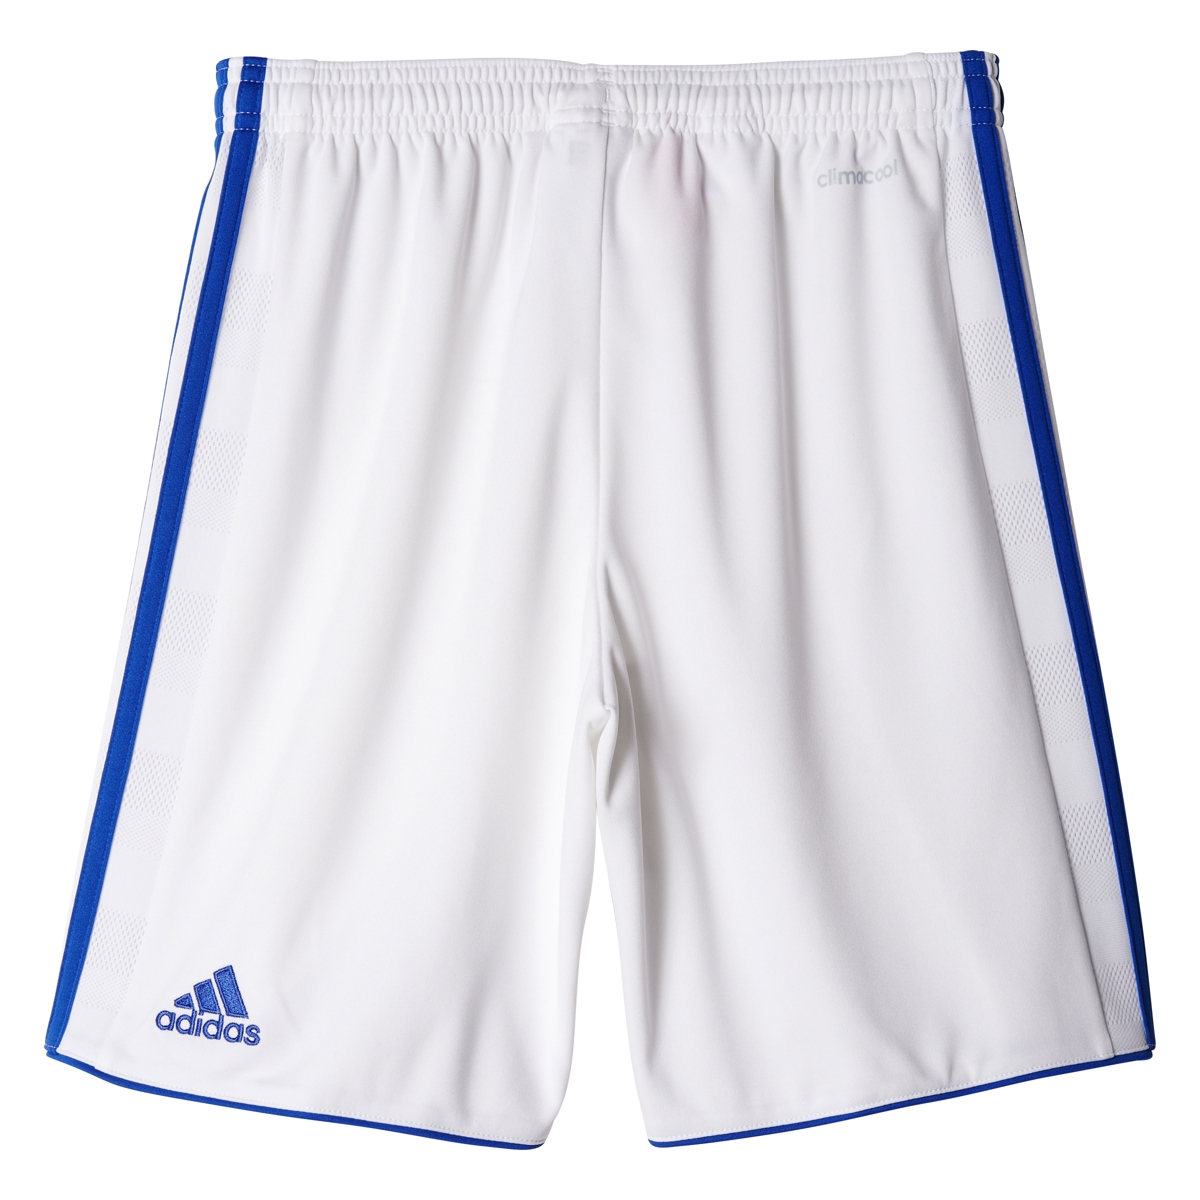 Adidas Youth Tastigo 17 Shorts- White/Blue - Soccer Premier